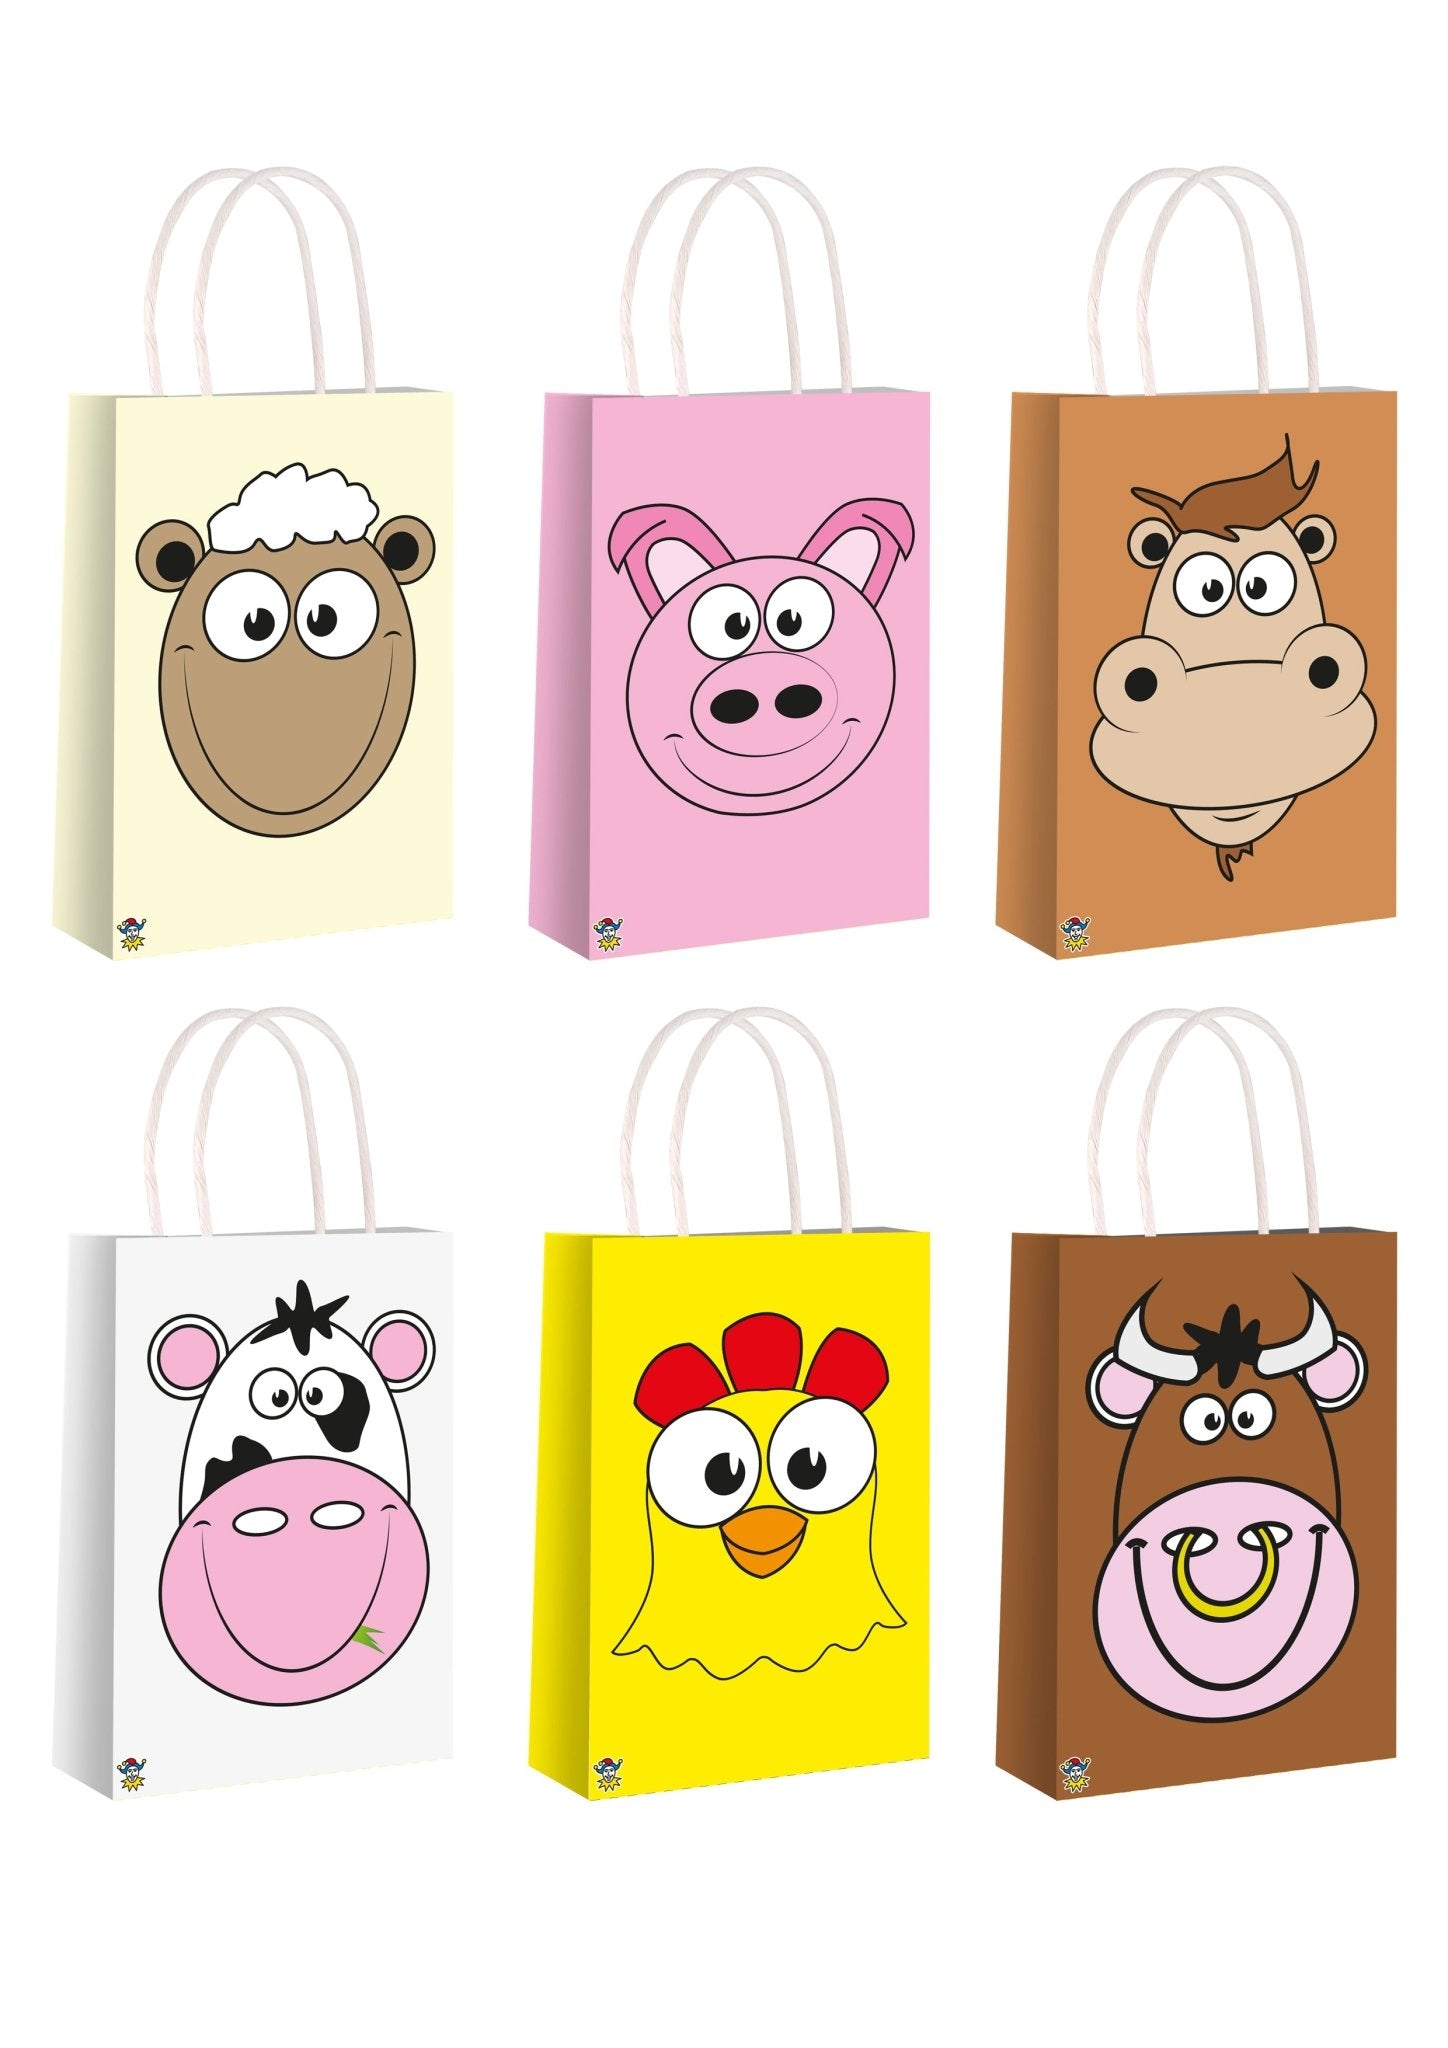 24 x Farm Animal Faces Paper Party Bag with Handles, 6 Assorted Designs - Bulk Bargain